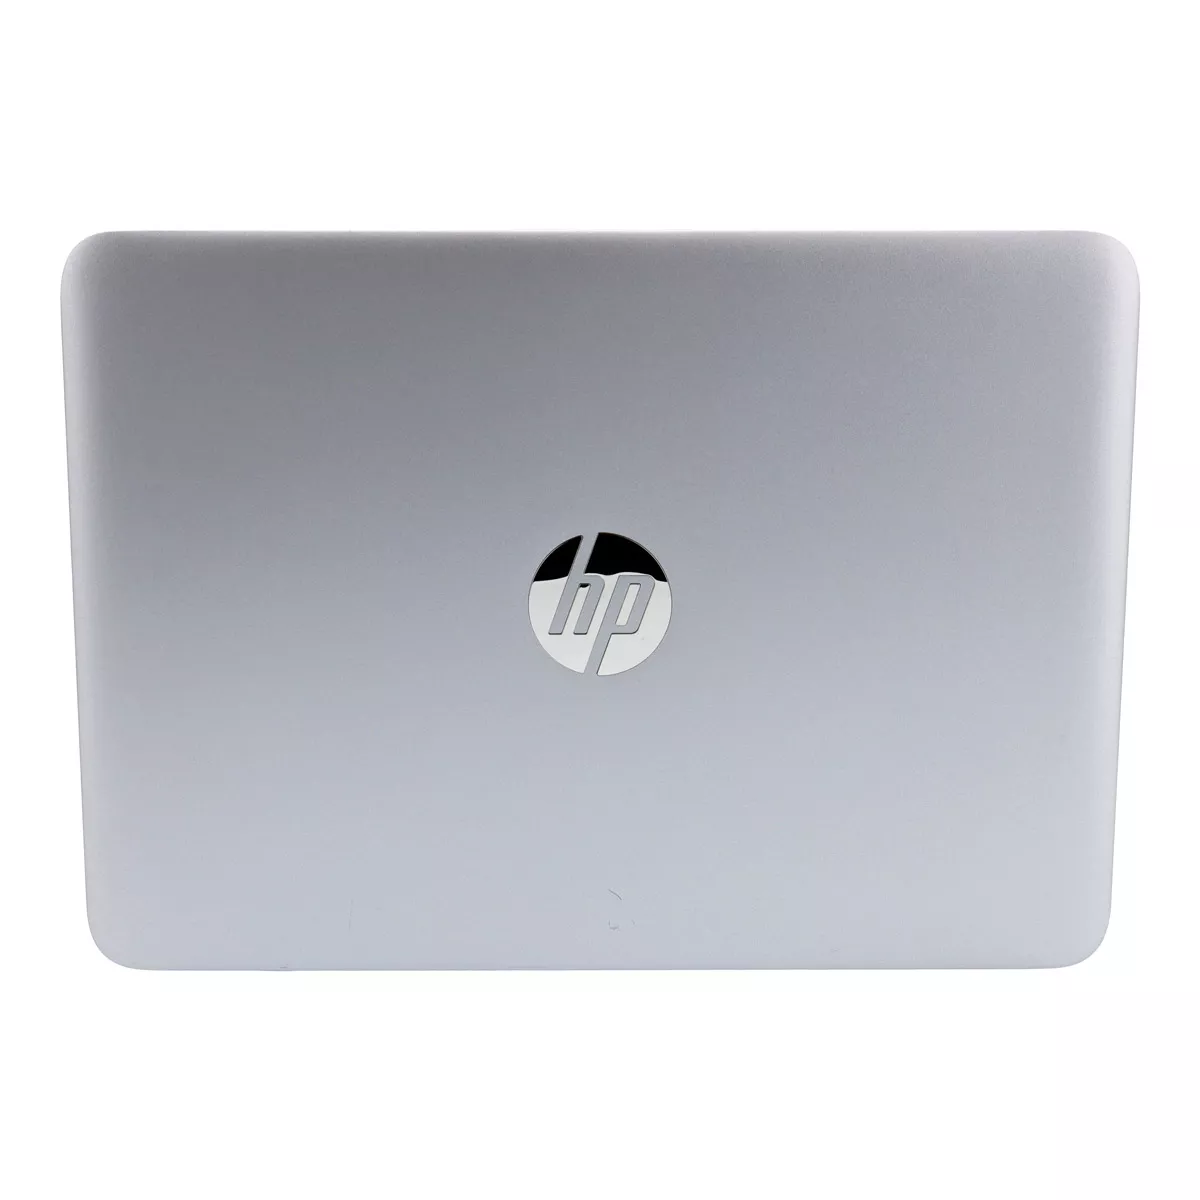 HP EliteBook 820 G4 Core i5 7300U 8 GB DDR4 256 GB M.2 SSD Webcam B-Ware